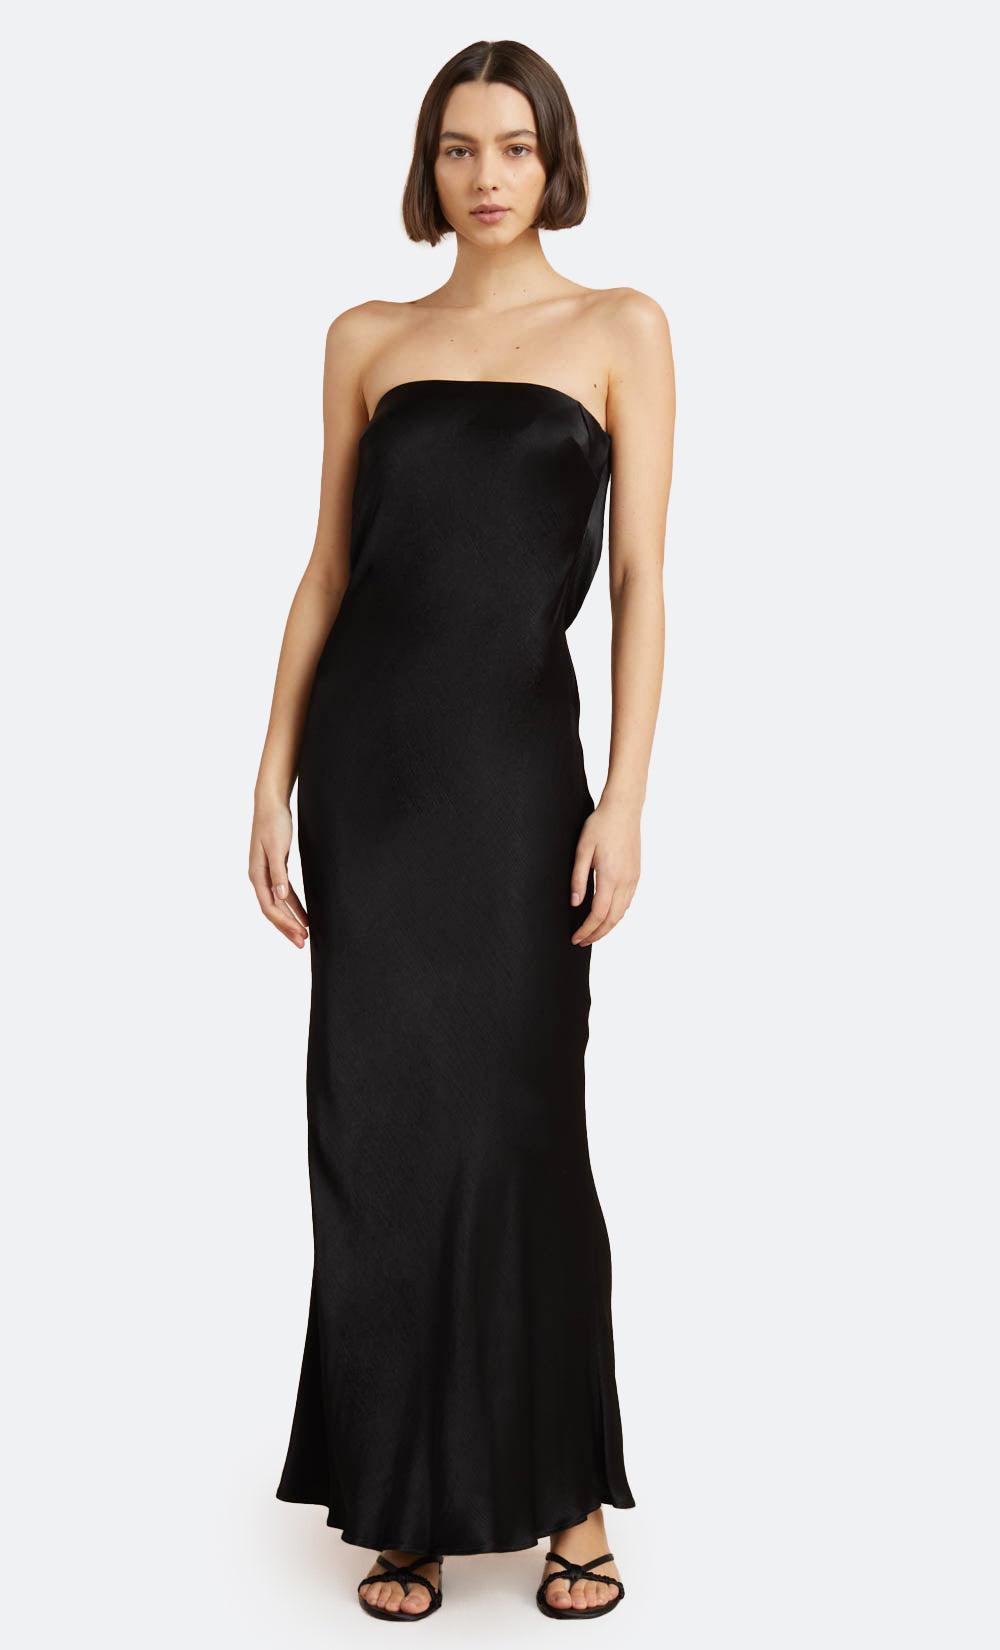 Thigh Split Strapless Black Satin Prom Dresses with Pockets FD2272 –  Viniodress